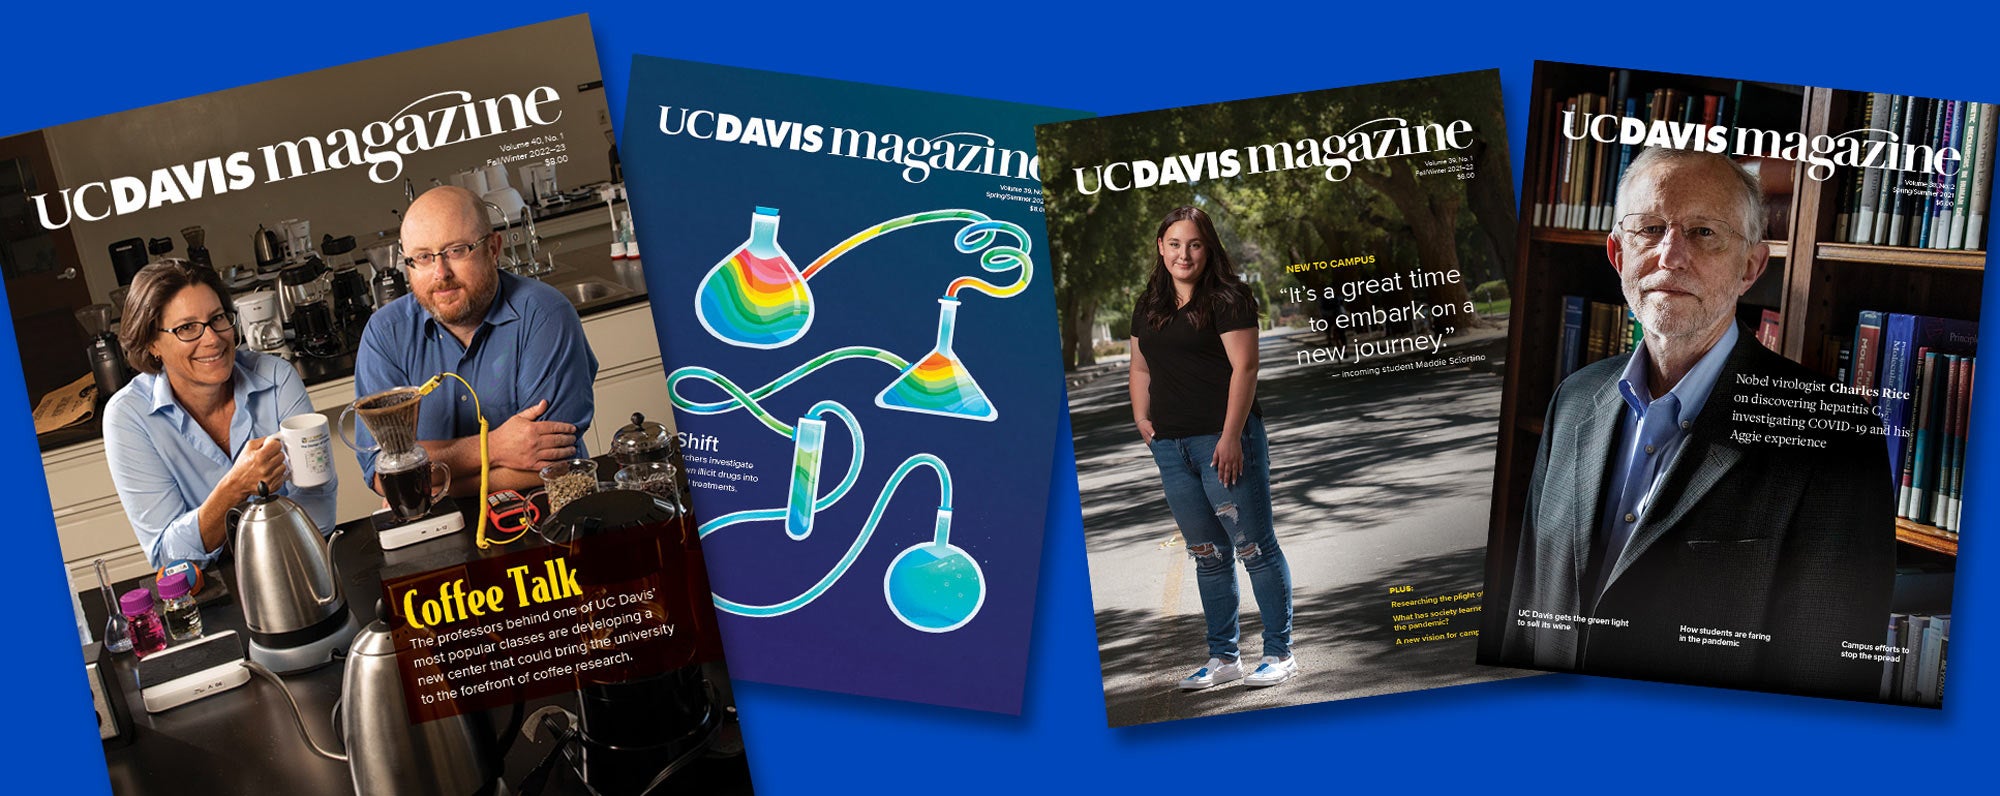 UC Davis Magazine covers (4), in collage